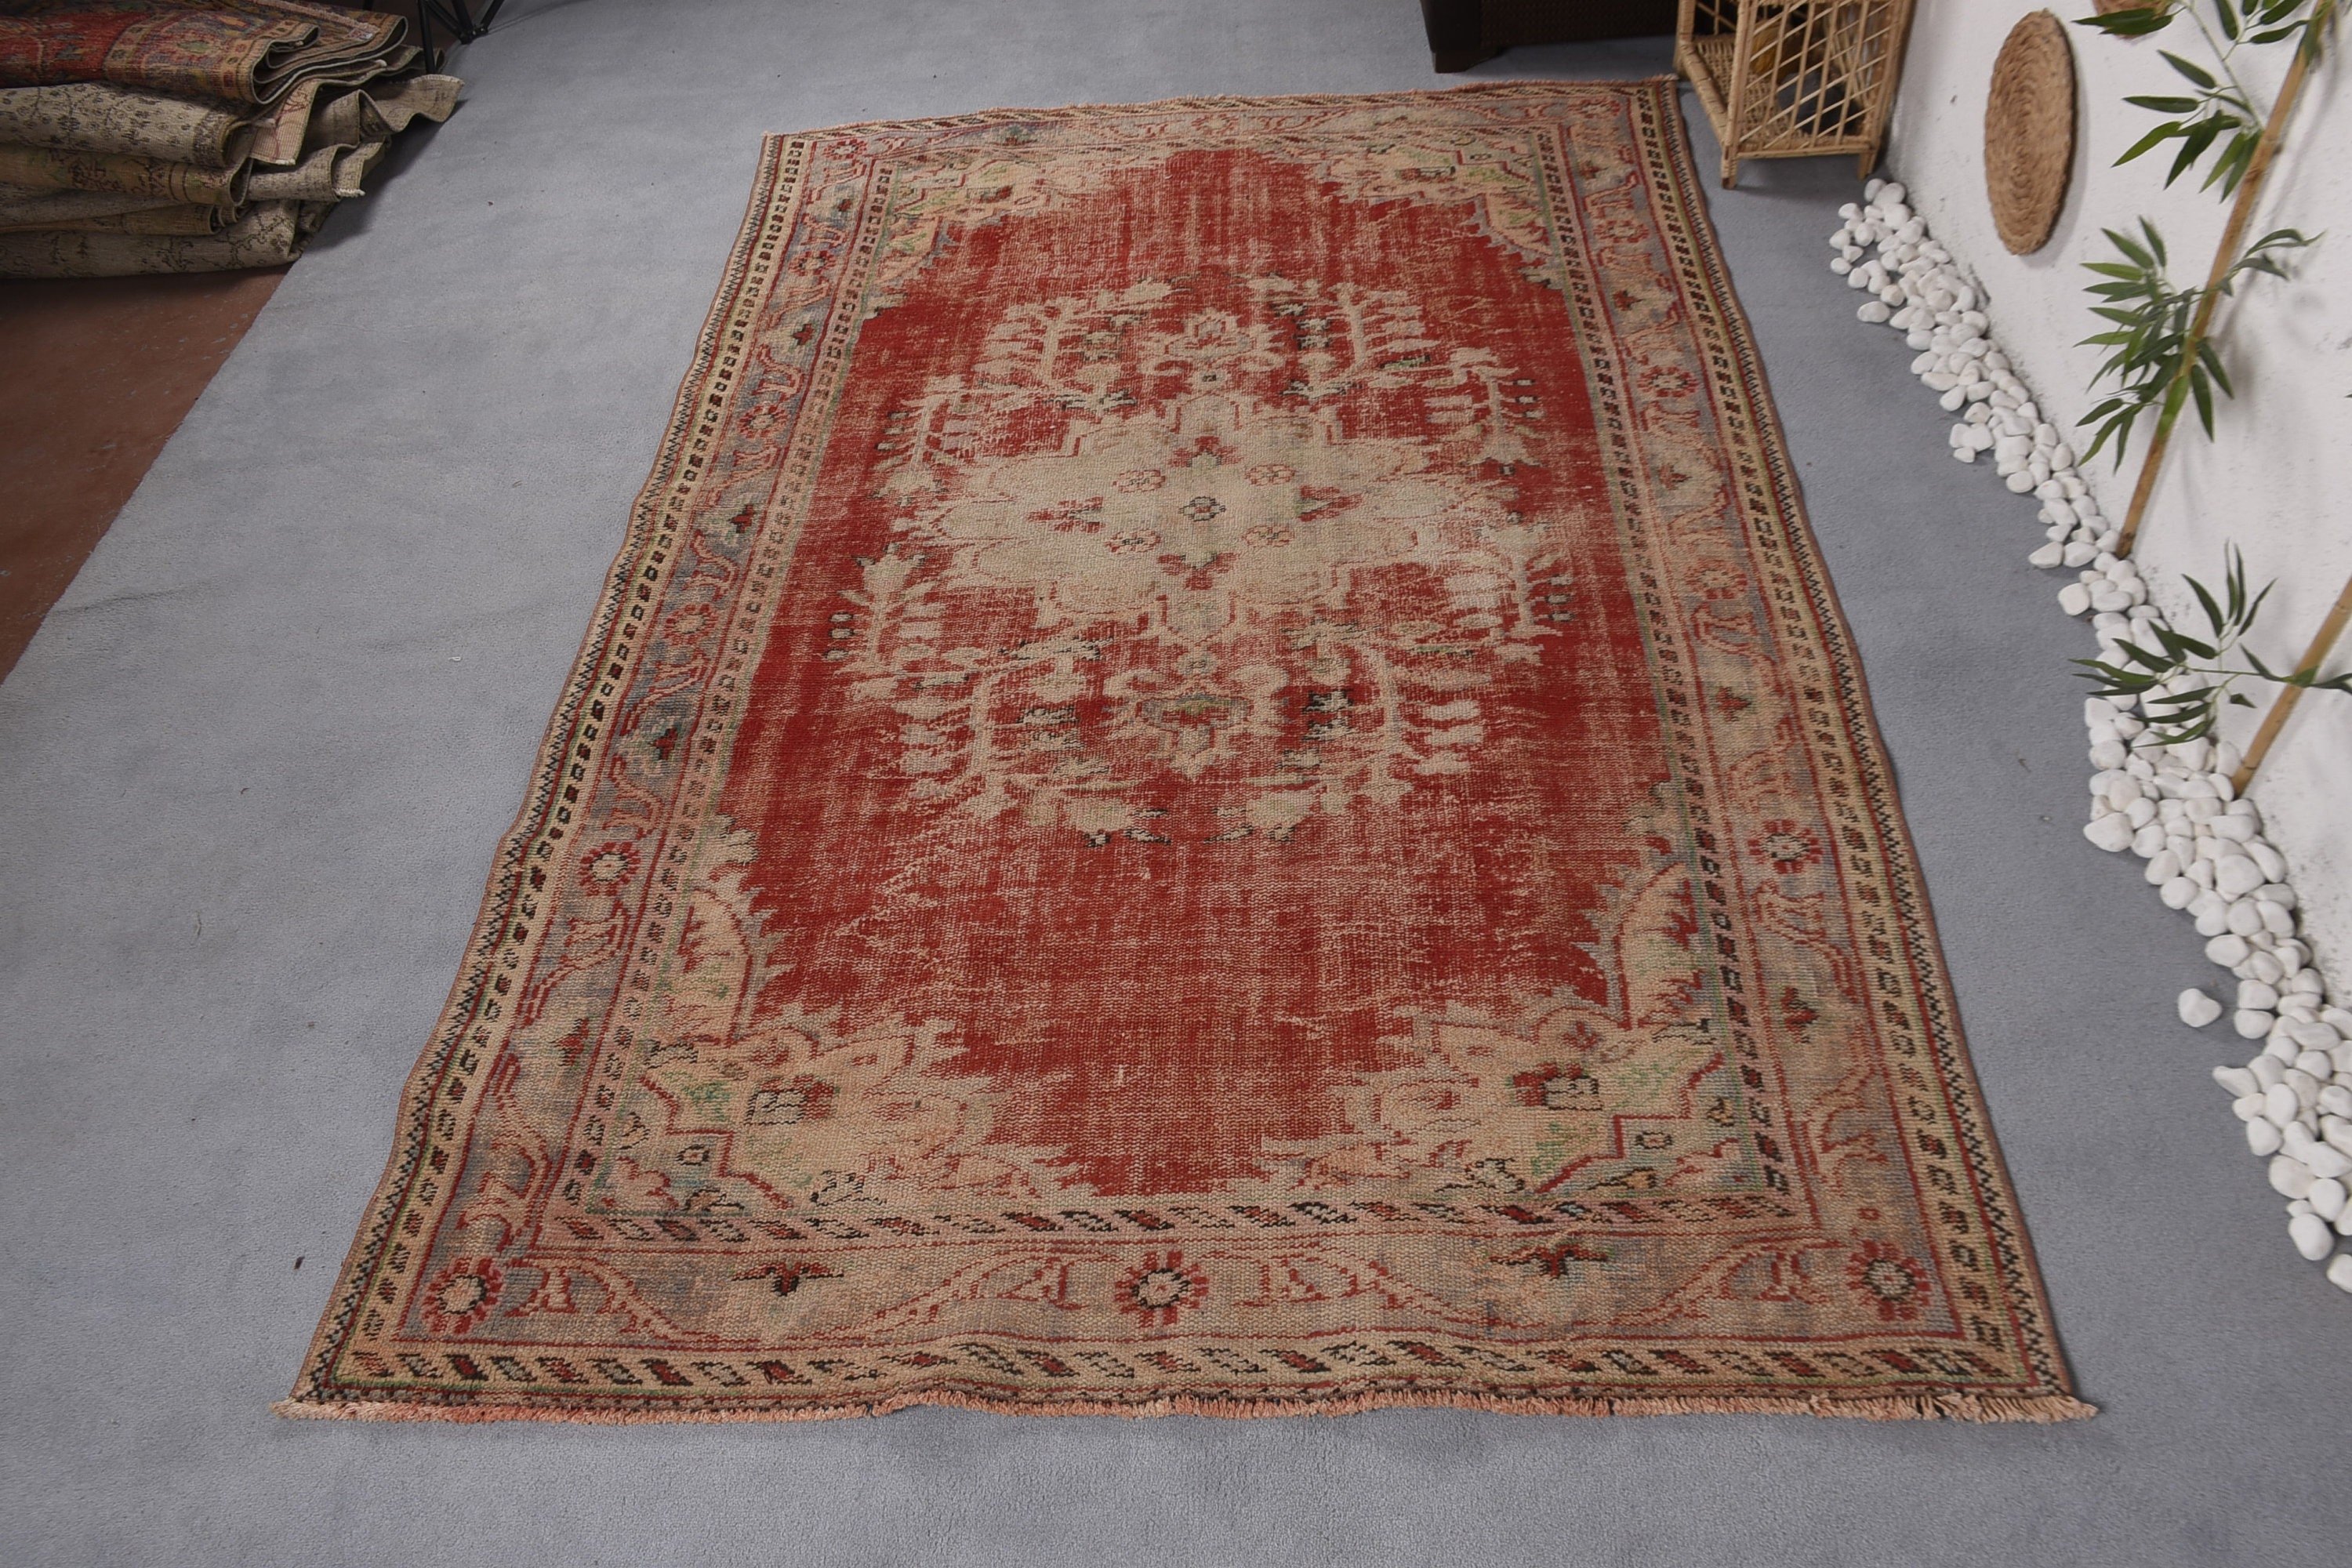 Anatolian Rug, Salon Rugs, Vintage Rug, Floor Rug, Red Moroccan Rugs, Turkish Rug, Art Rug, Dining Room Rugs, 6.3x9.4 ft Large Rugs